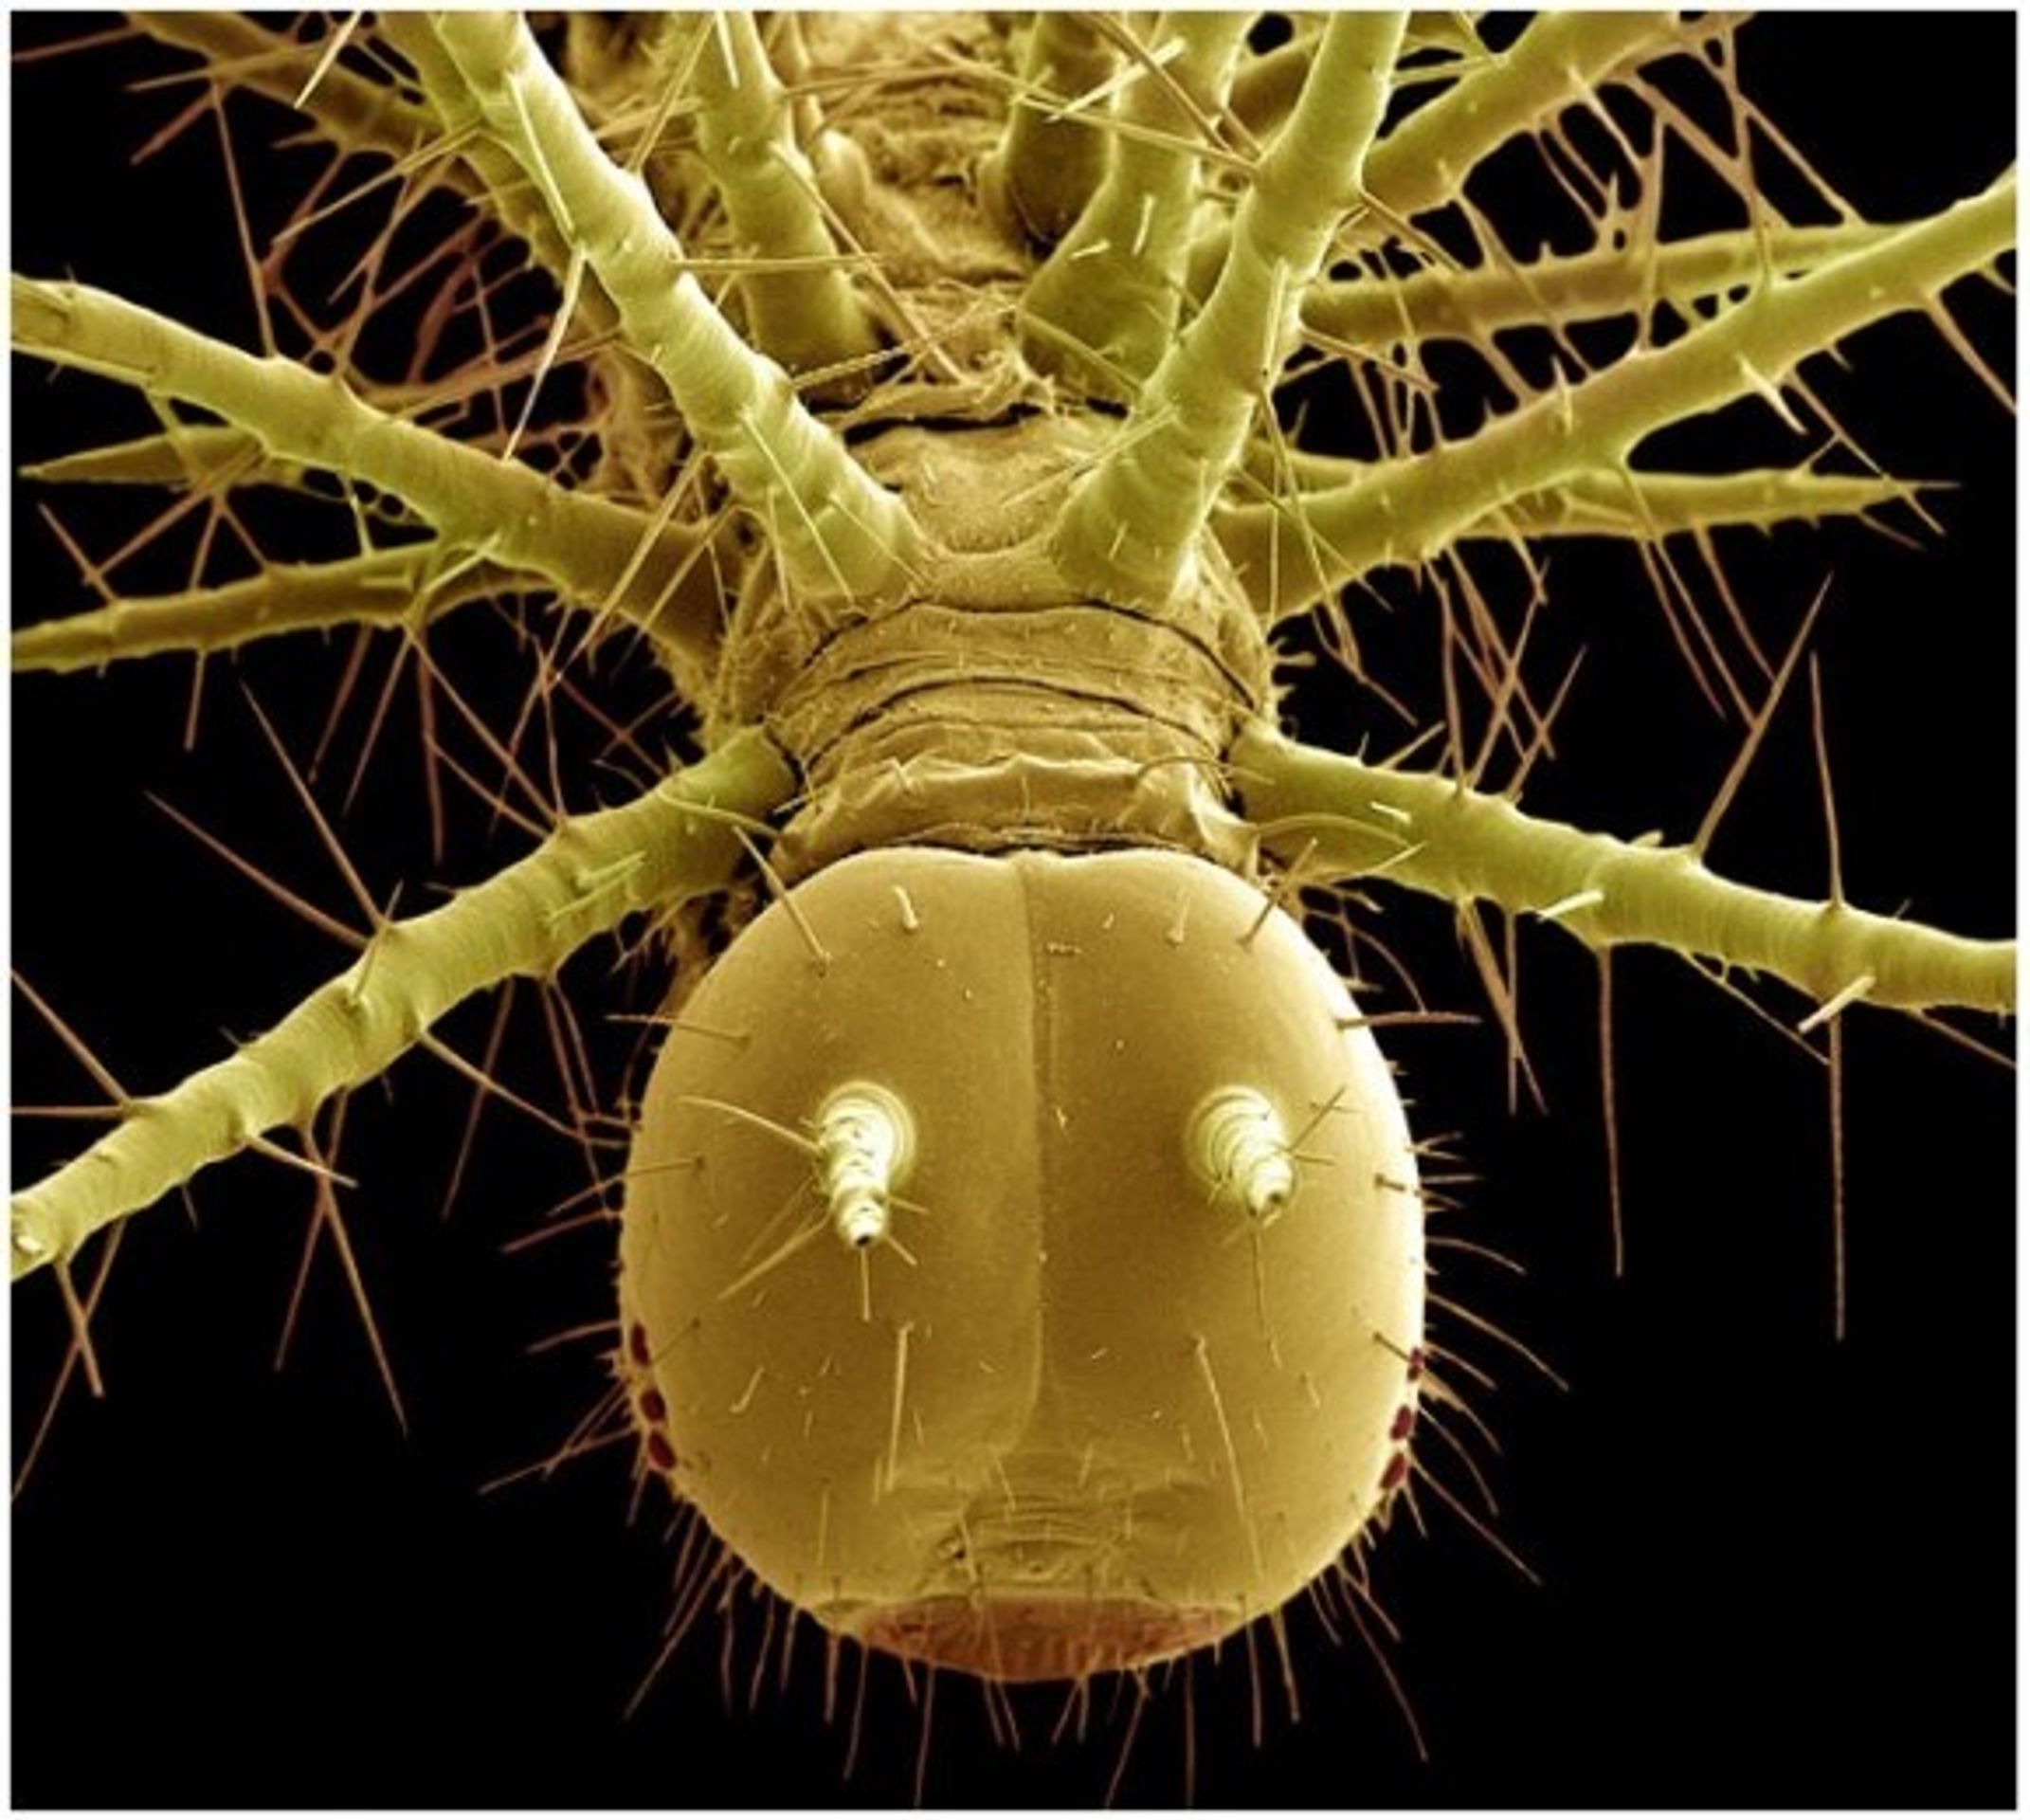 Hmyz pod elektronovým mikroskopem - 18 - GALERIE: Hmyz pod elektronovým mikroskopem (4/20)